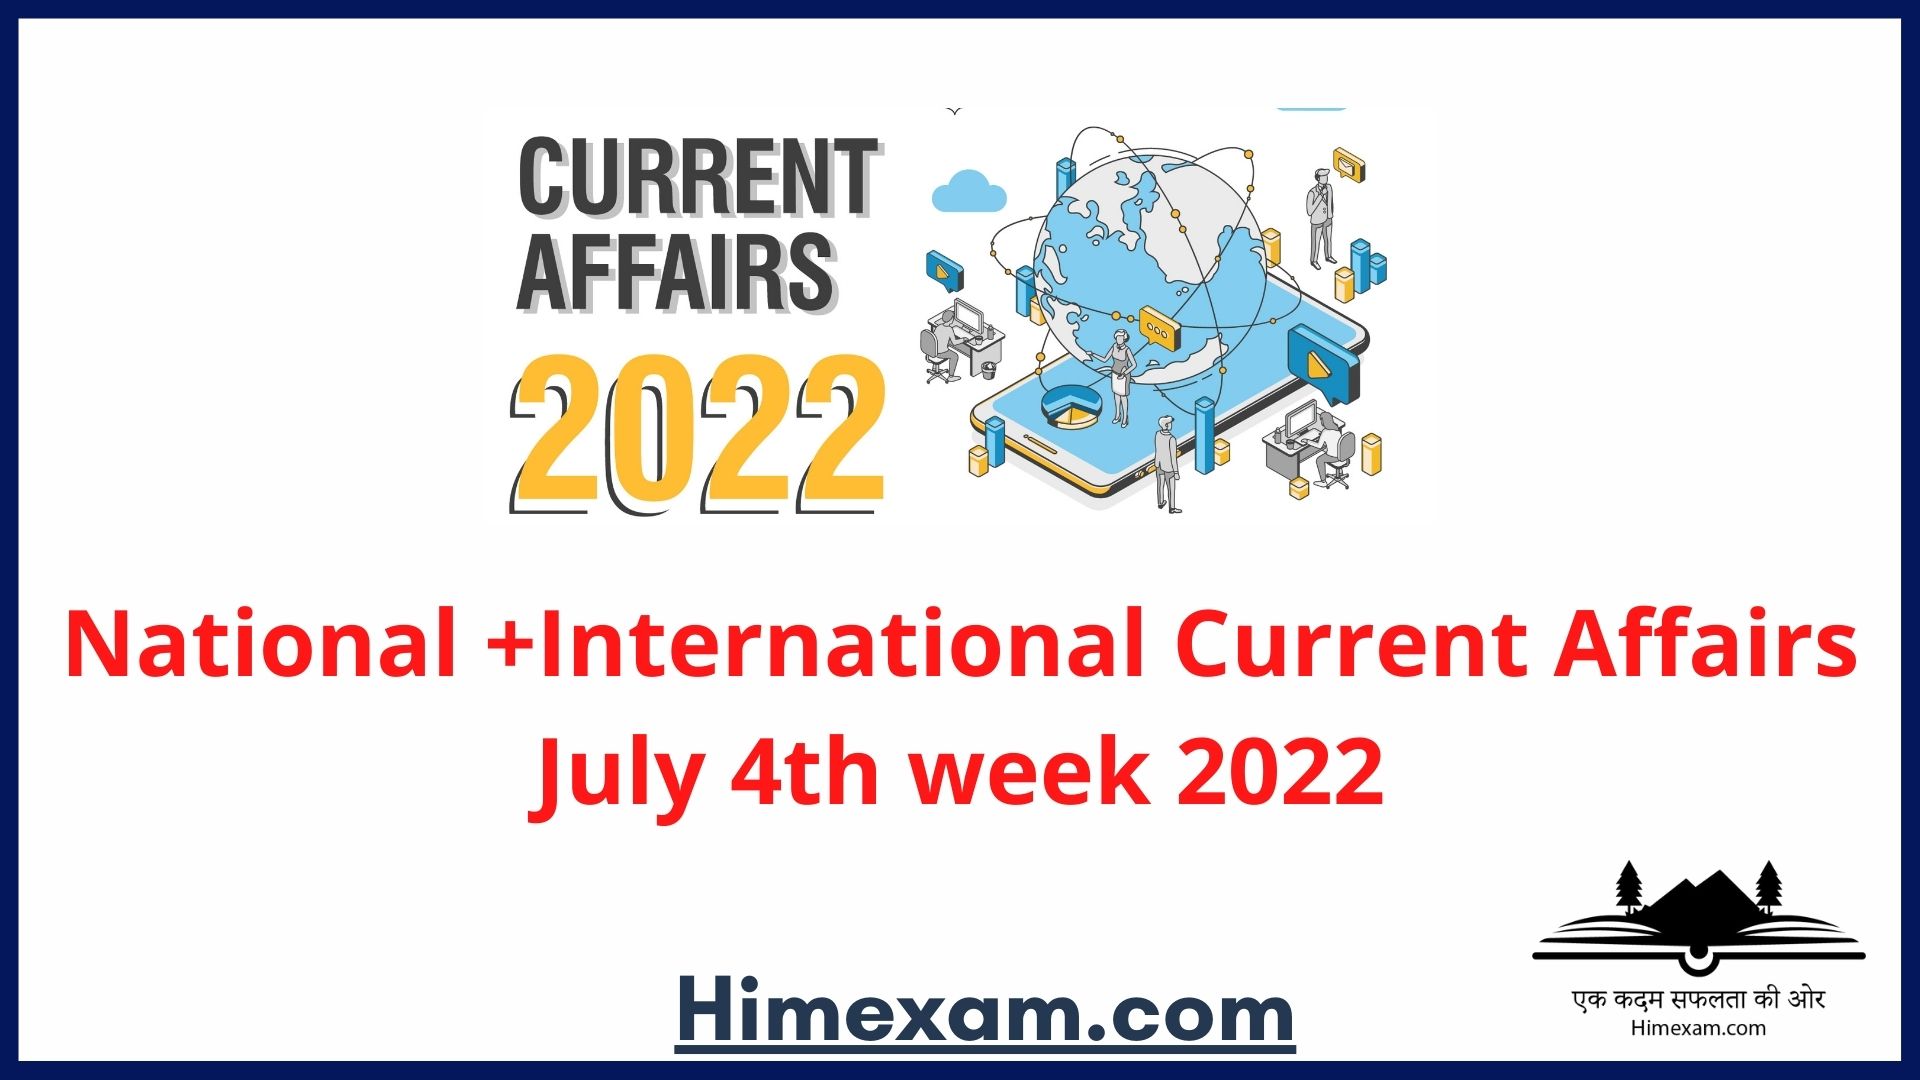 National +International Current Affairs July 4th week 2022